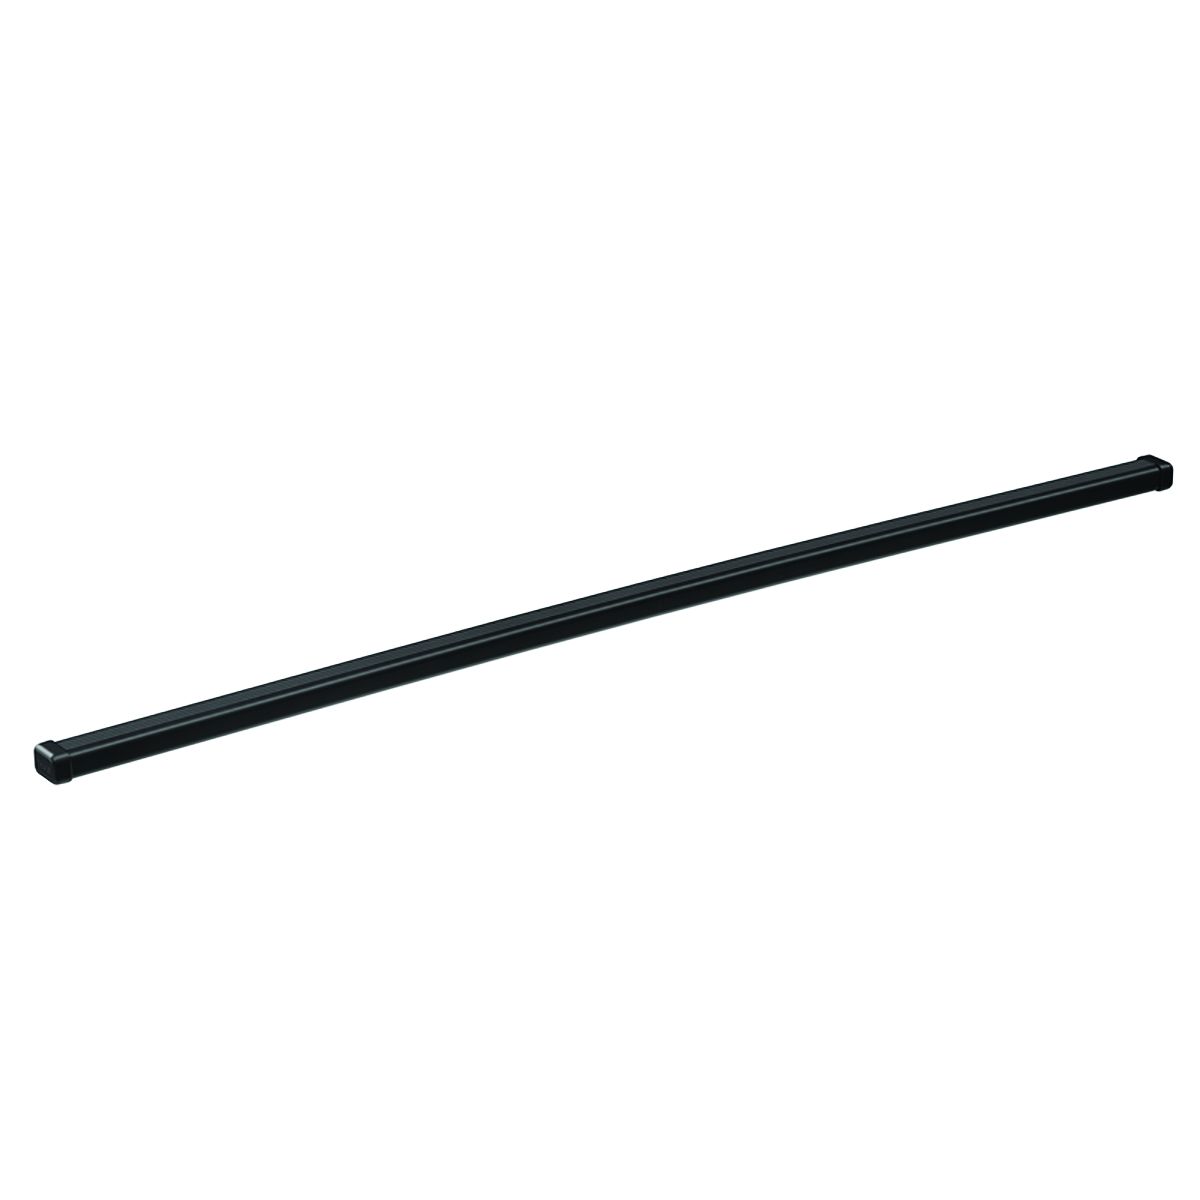 Thule 712300 - (2) Black Evo SquareBar Roof Bars (127 cm / 50")